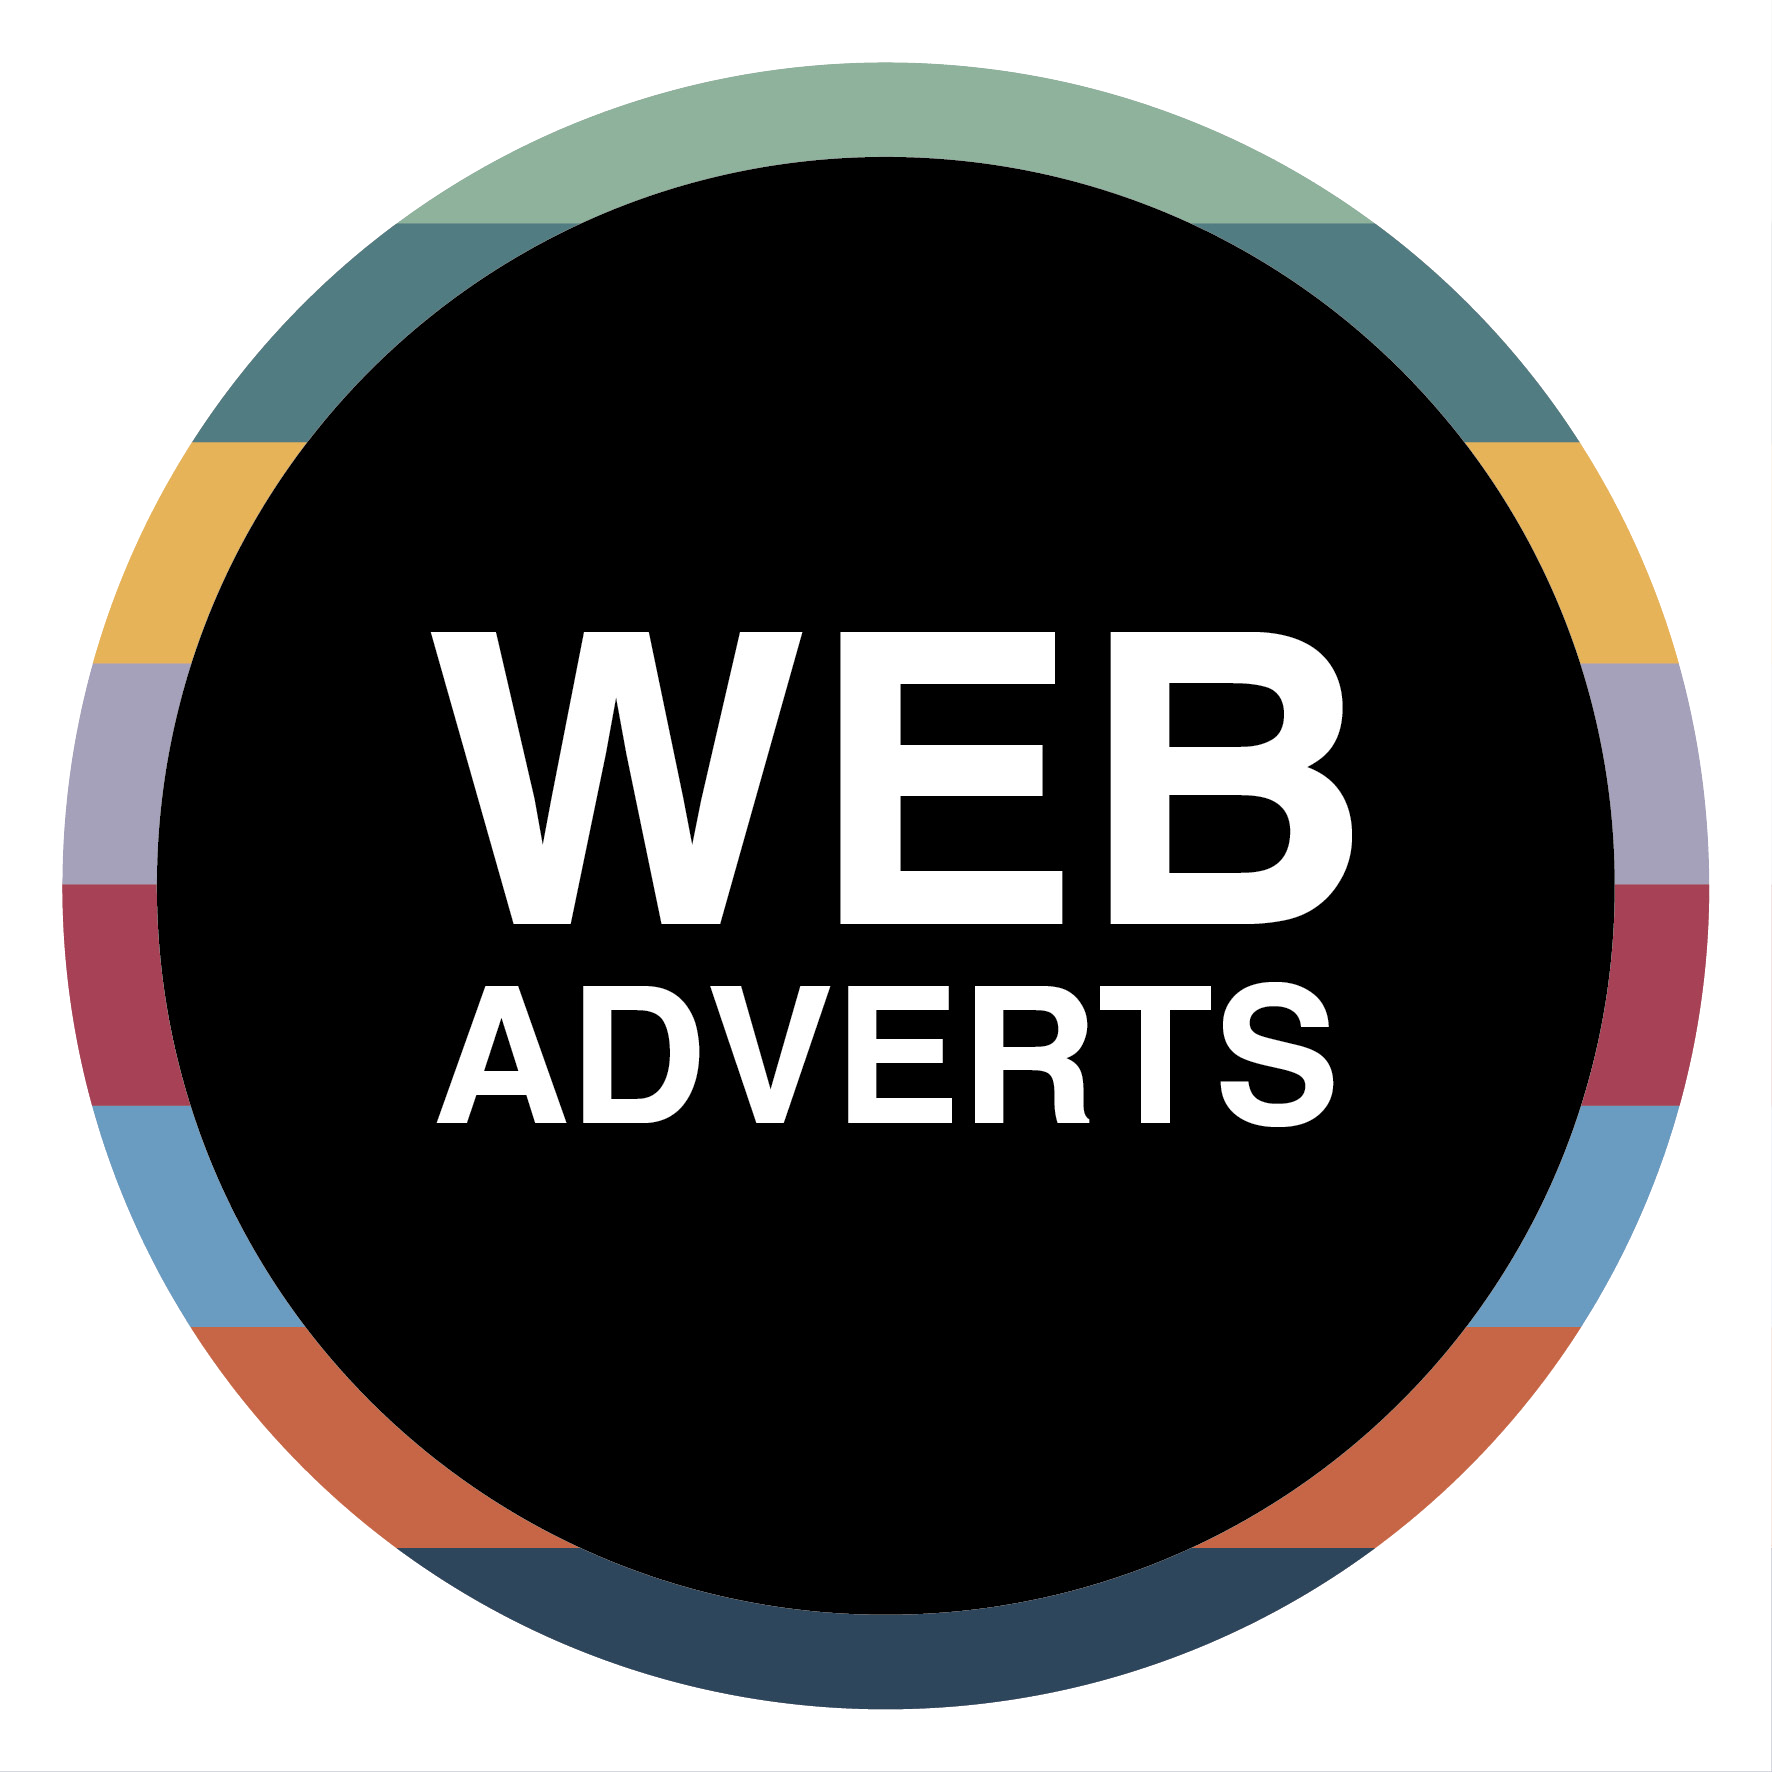 Web Adverts icon